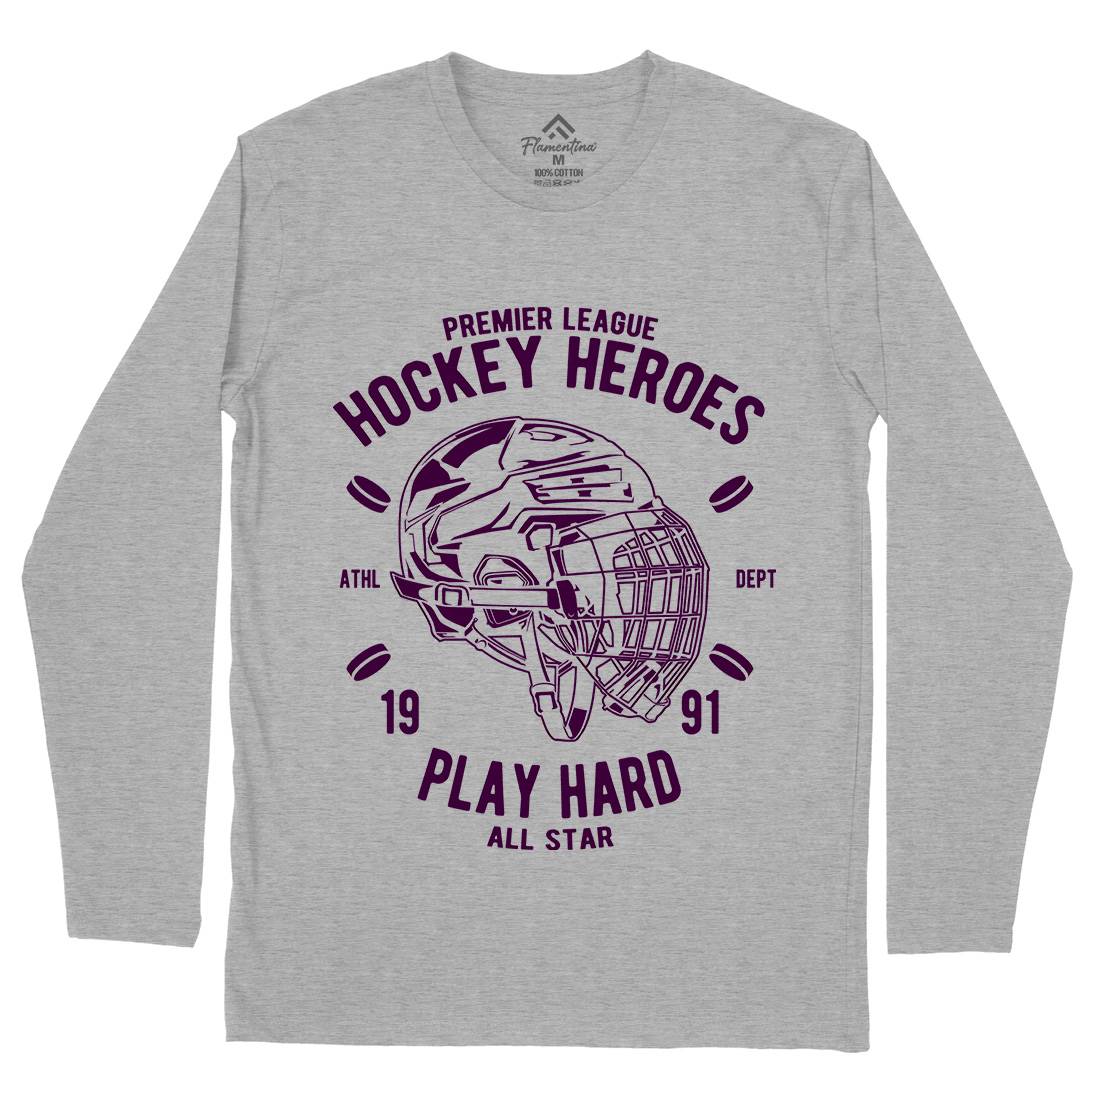 Hockey Heroes Mens Long Sleeve T-Shirt Sport A064